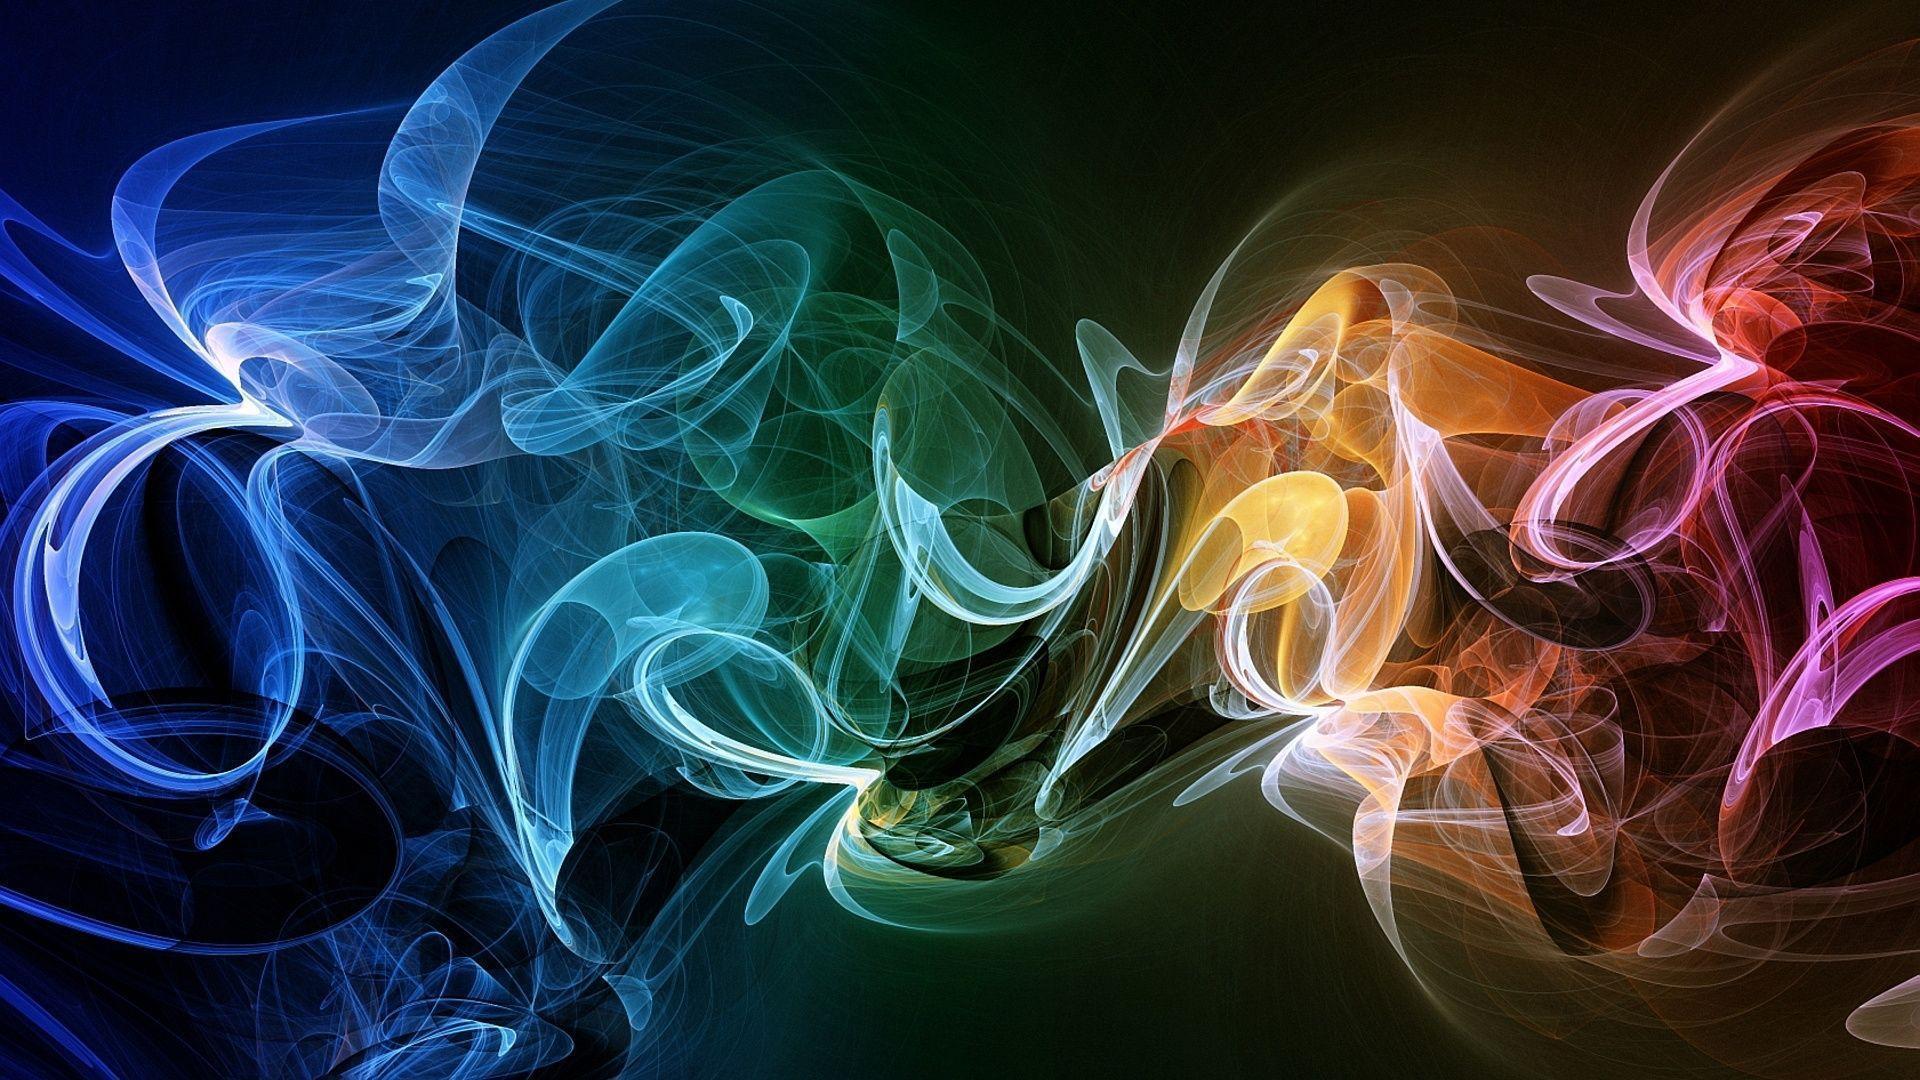 image For > Colorful Smoke Wallpaper